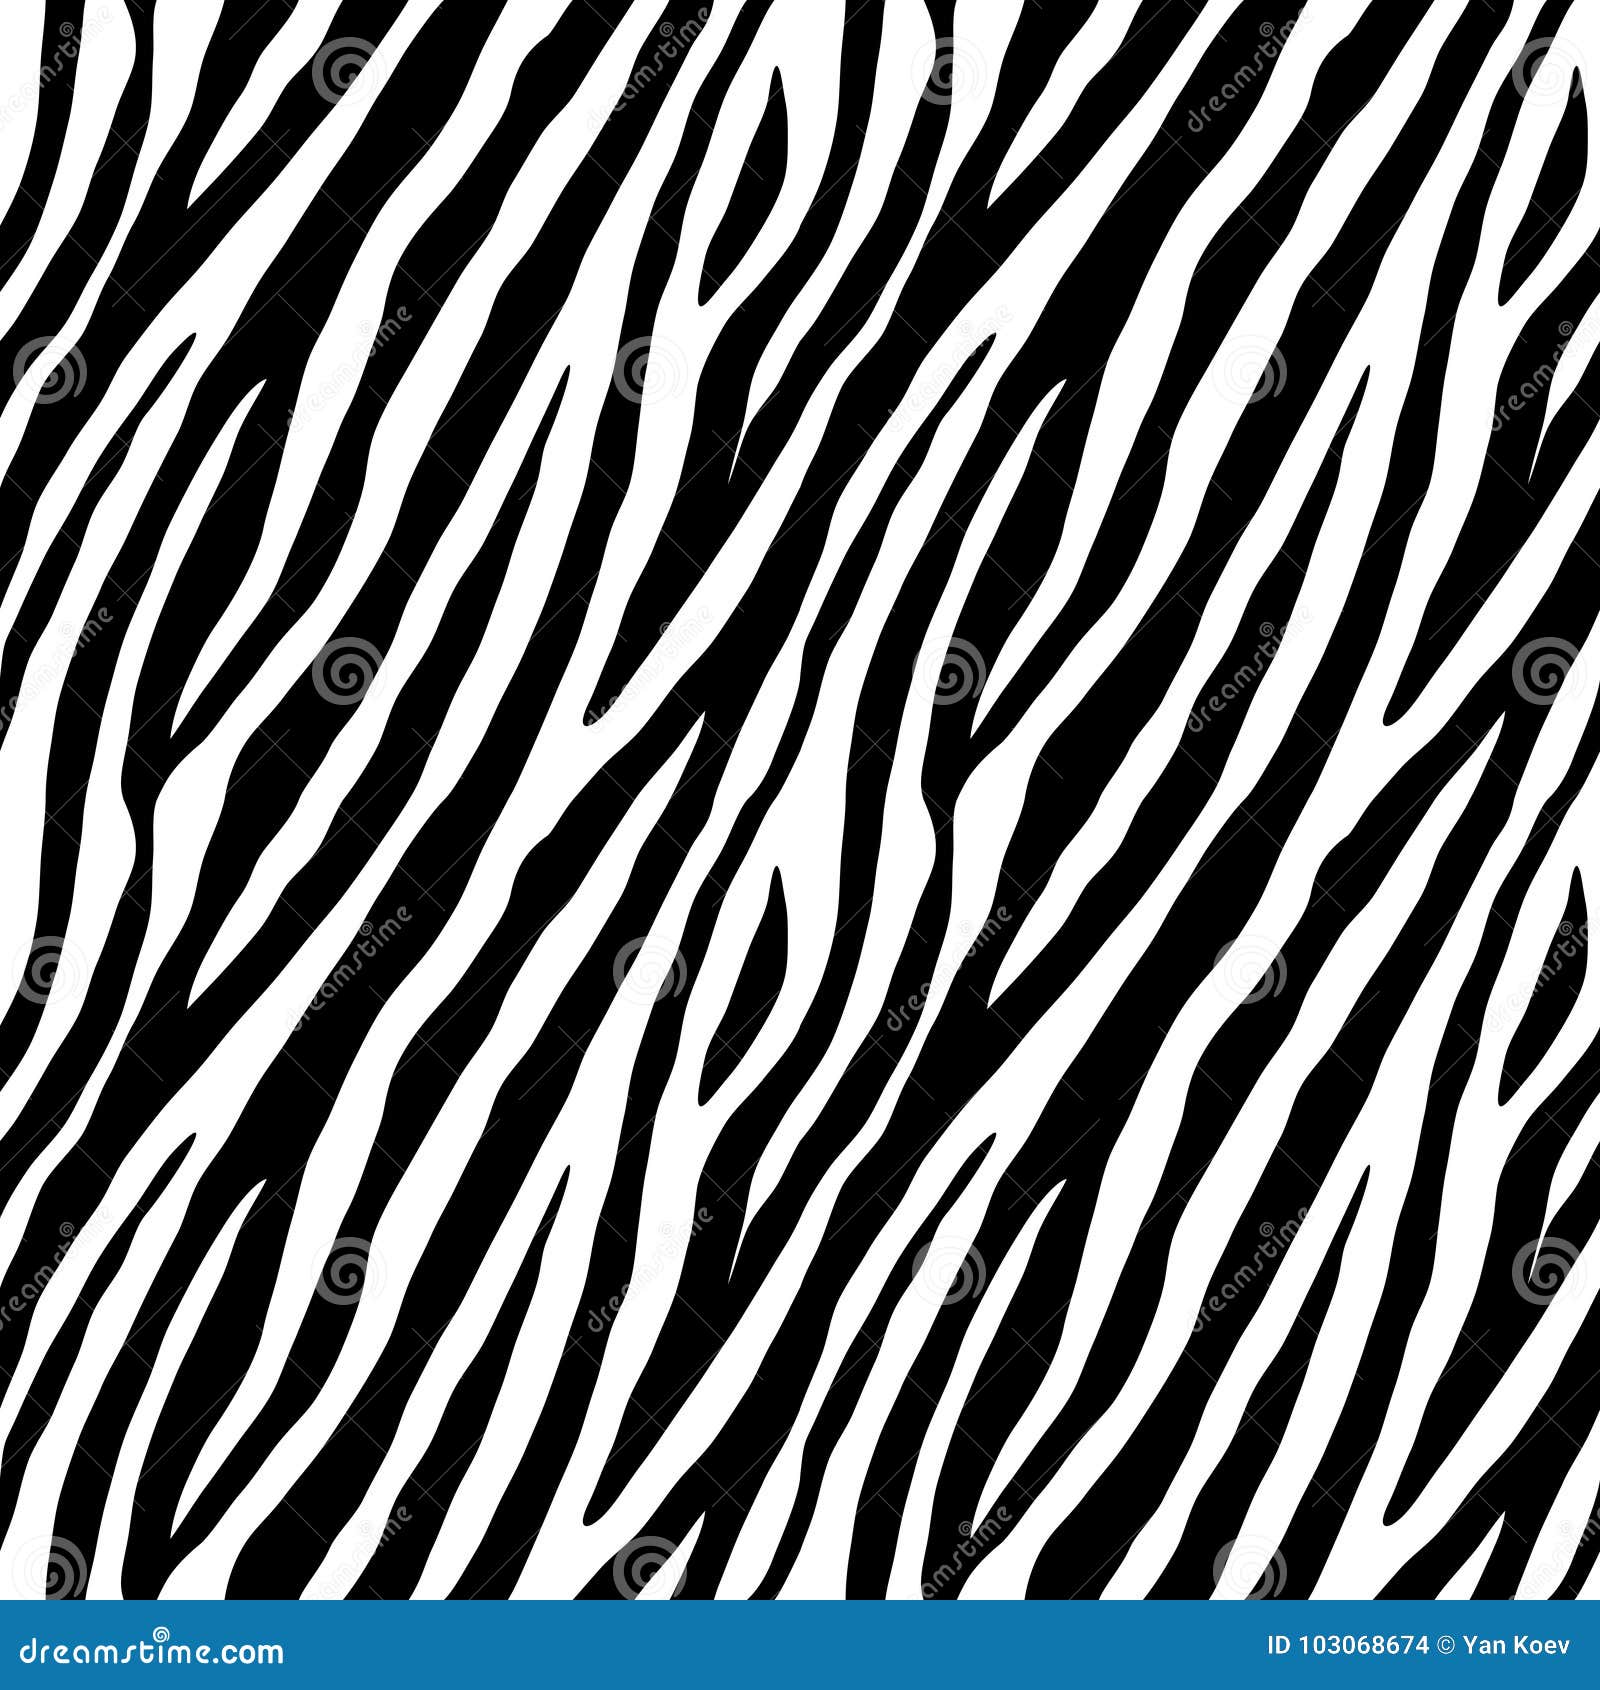 zebra repeated seamless pattern